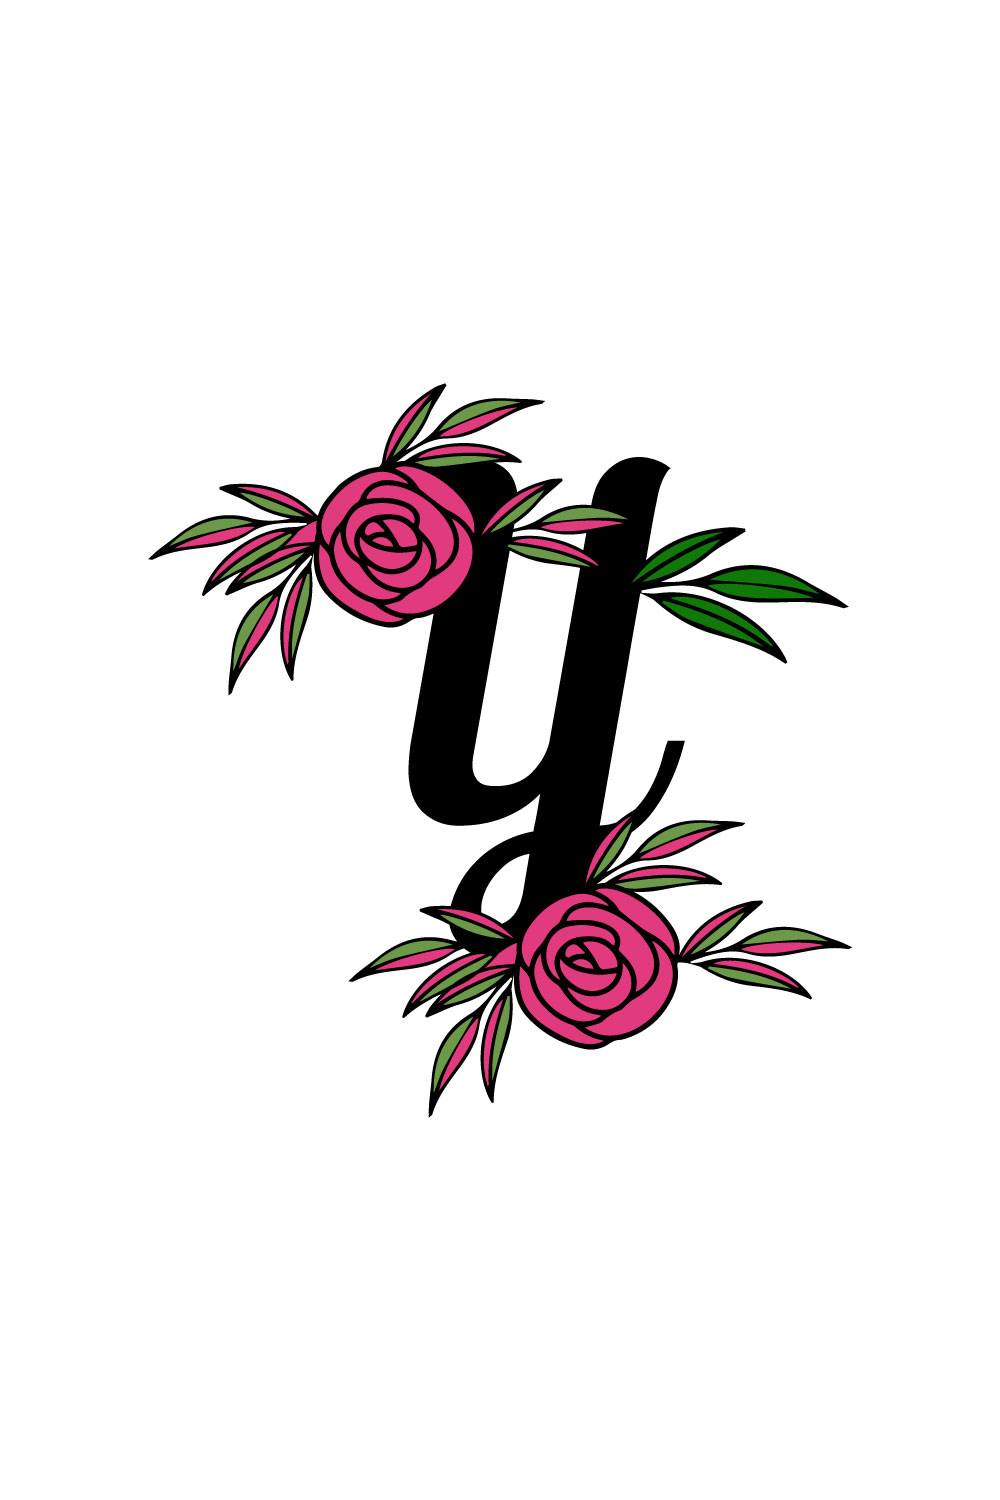 Free Y rose floral logo pinterest preview image.